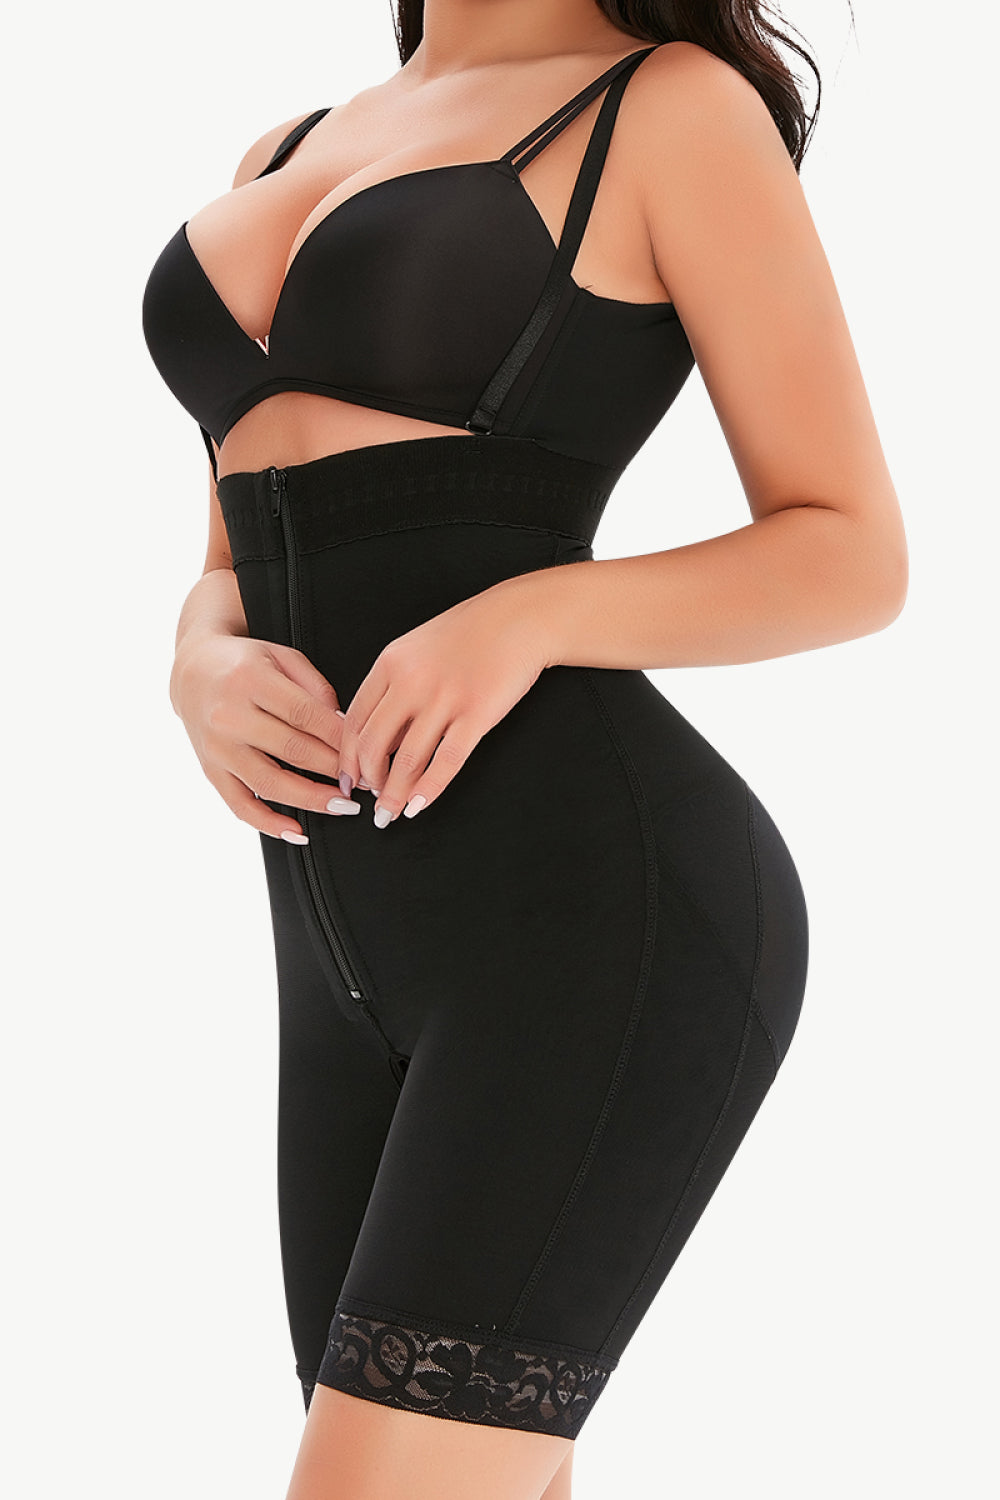 Full Size Lace Detail Zip-Up Under-Bust Shaping Bodysuit - DromedarShop.com Online Boutique